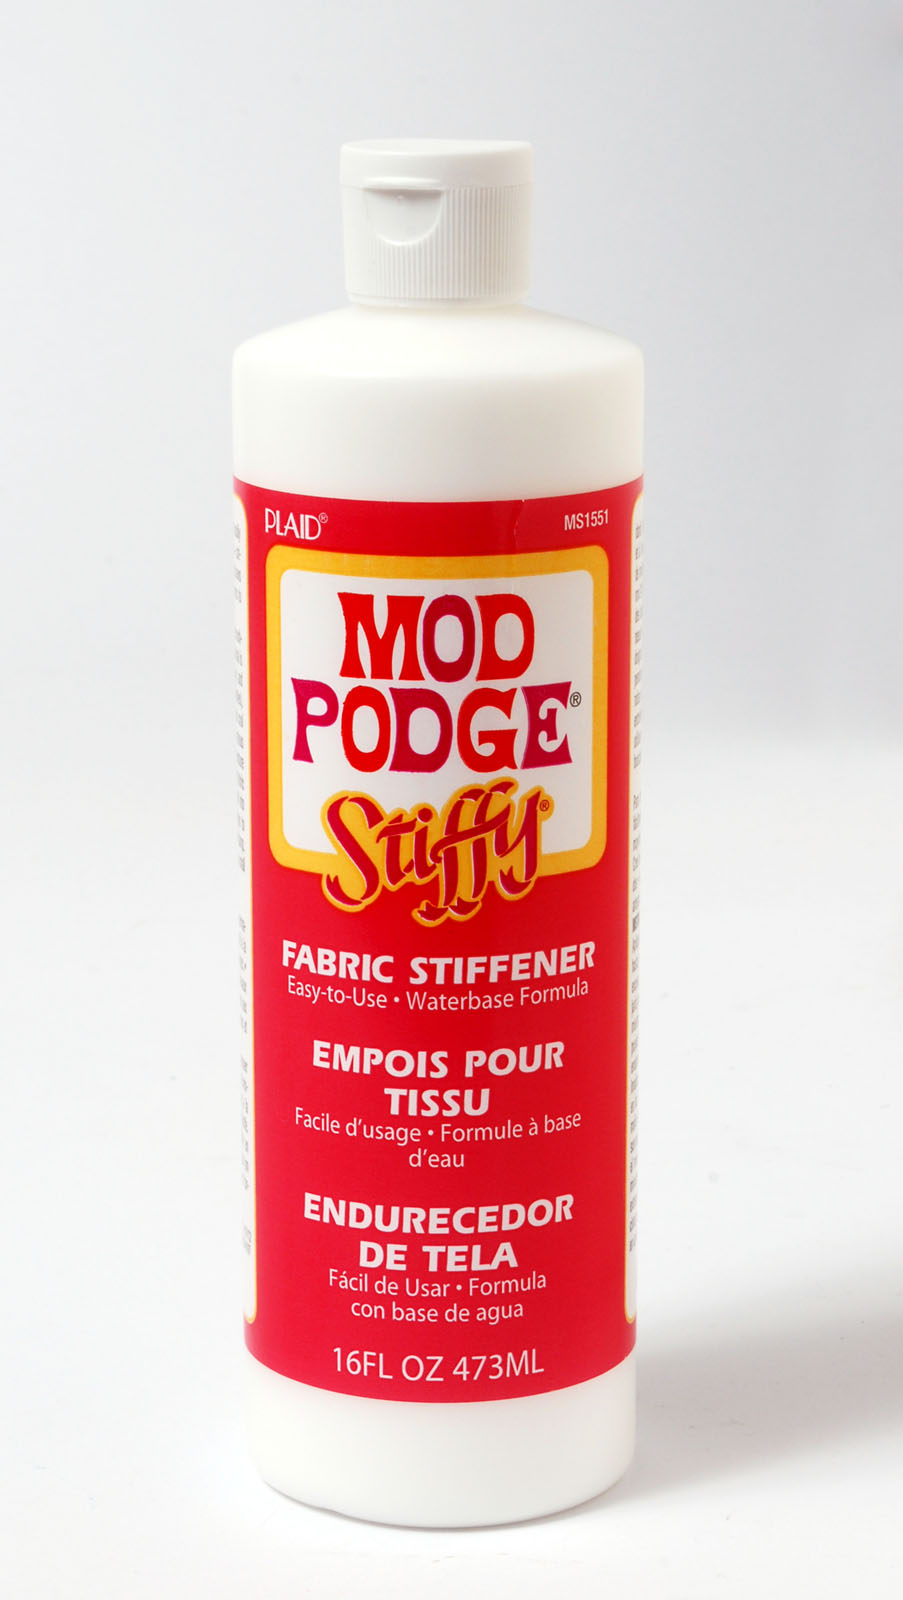 Mod Podge Stiffy 473ml - Textile Hardener